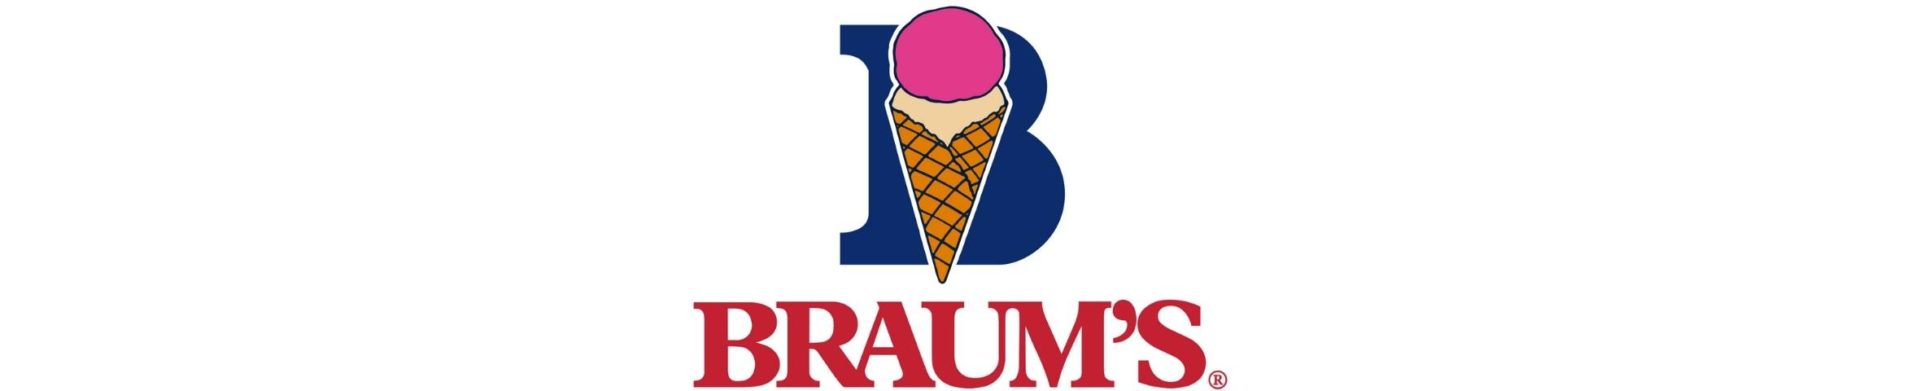 Braum's Ice Cream and Dairy logo